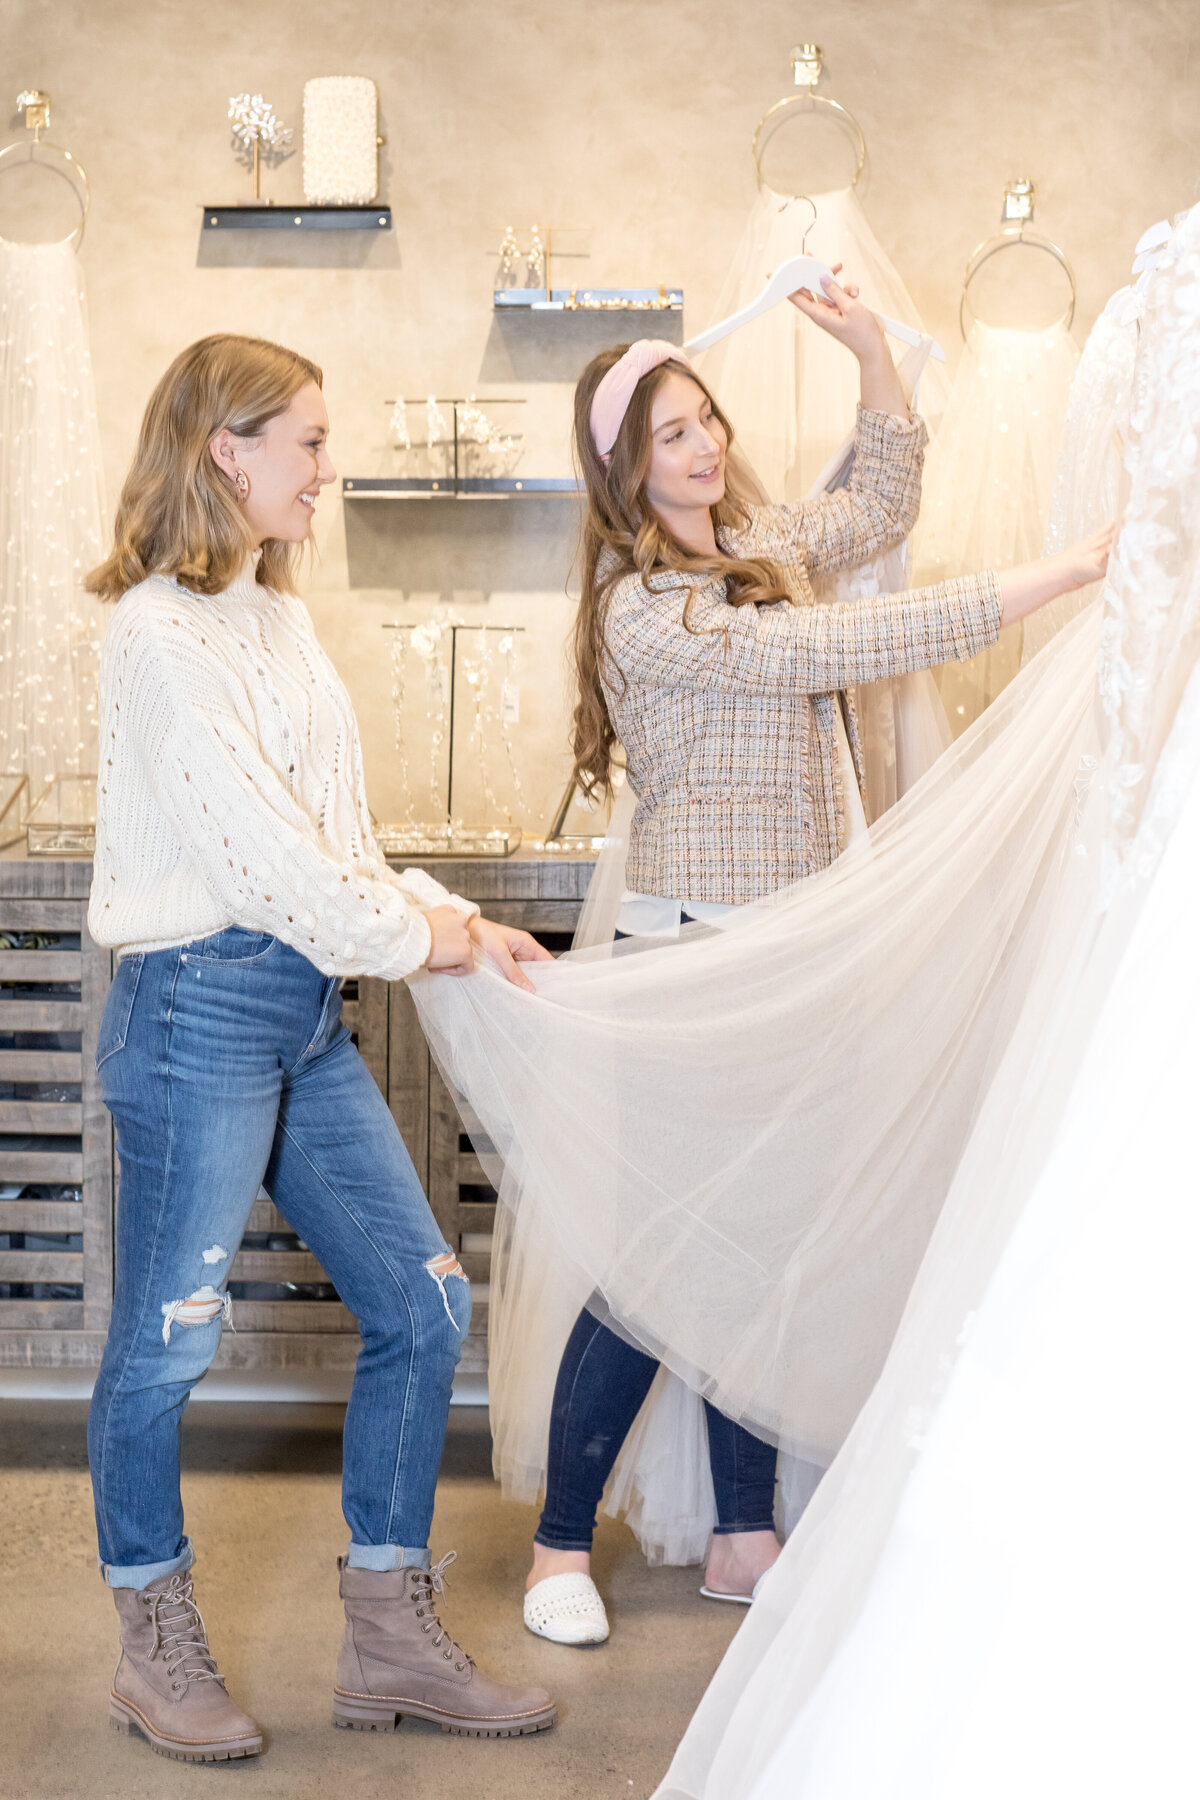 women adjusting a wedding dress that is on display